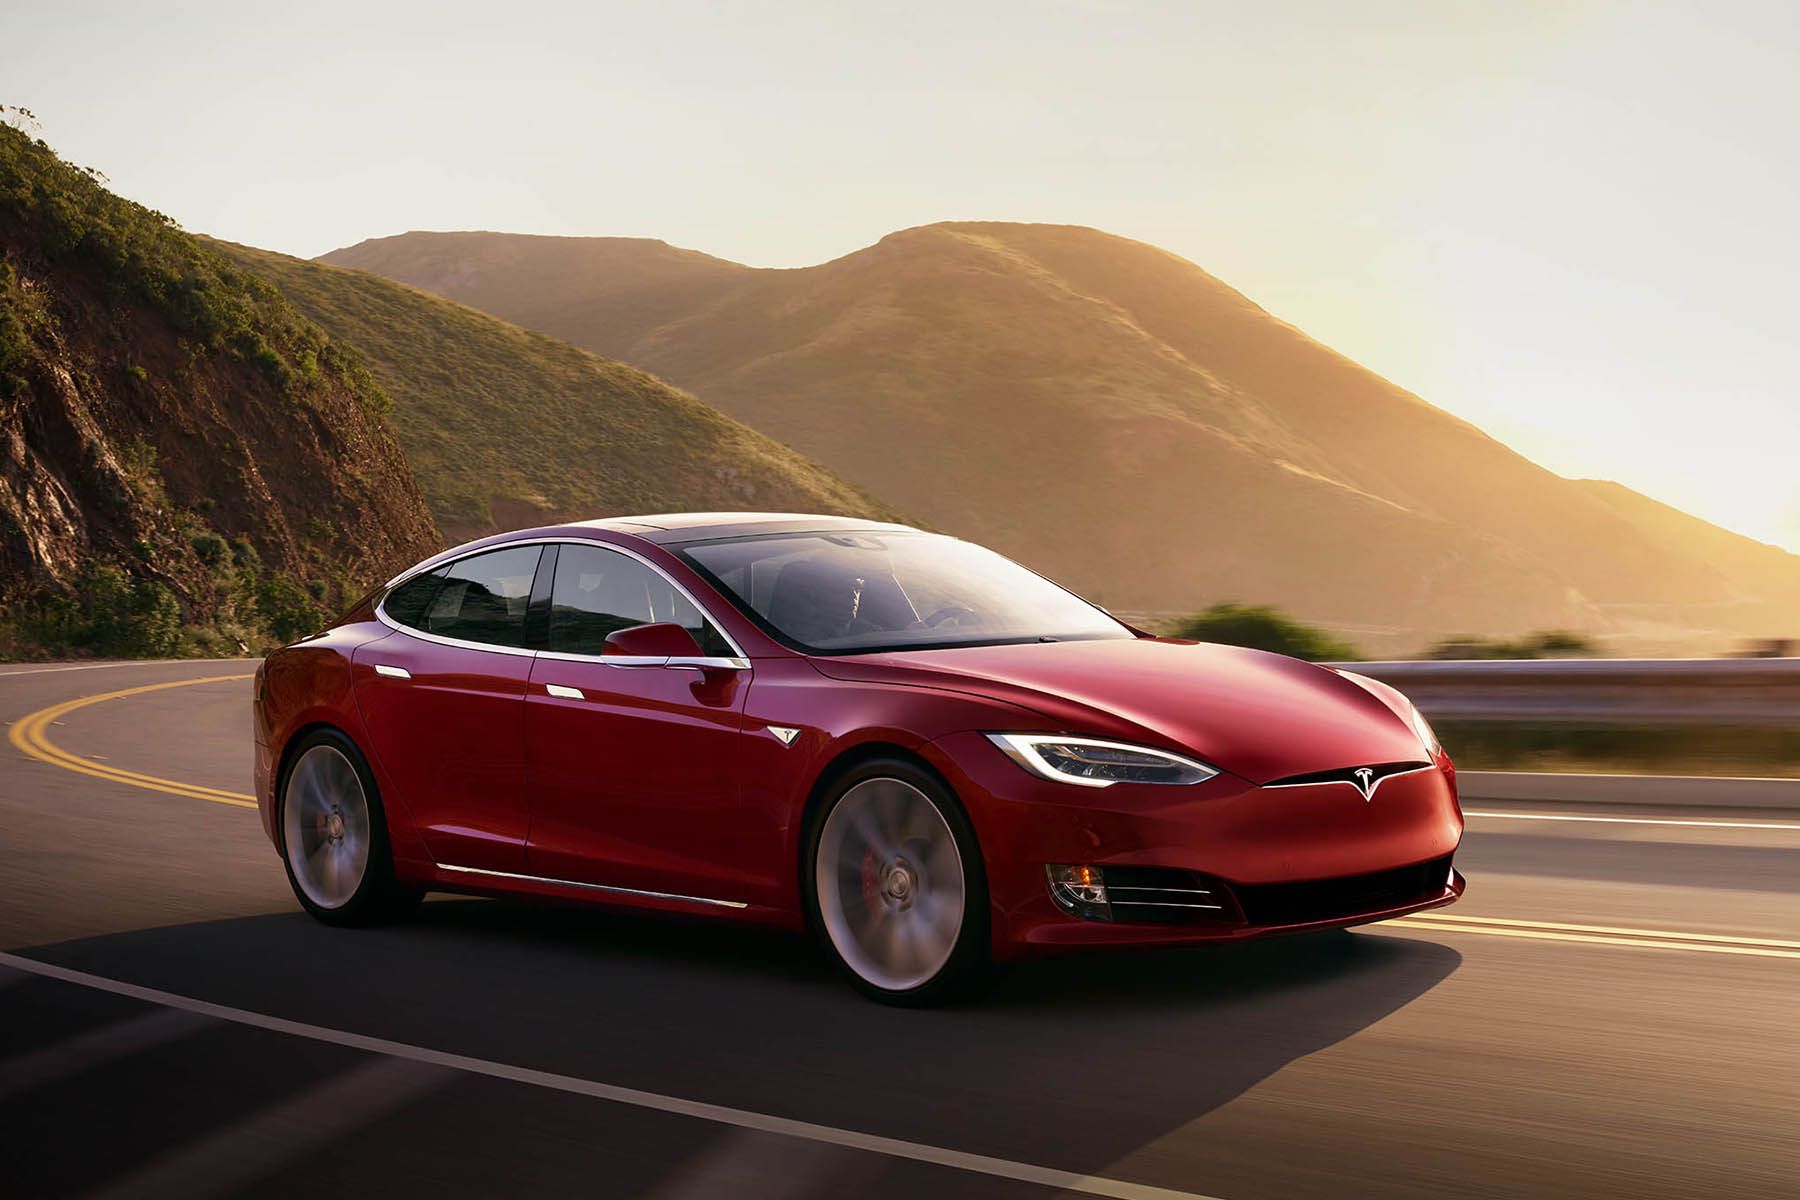 Global EV shipments up 79% YoY in Q1, Tesla leads: Report